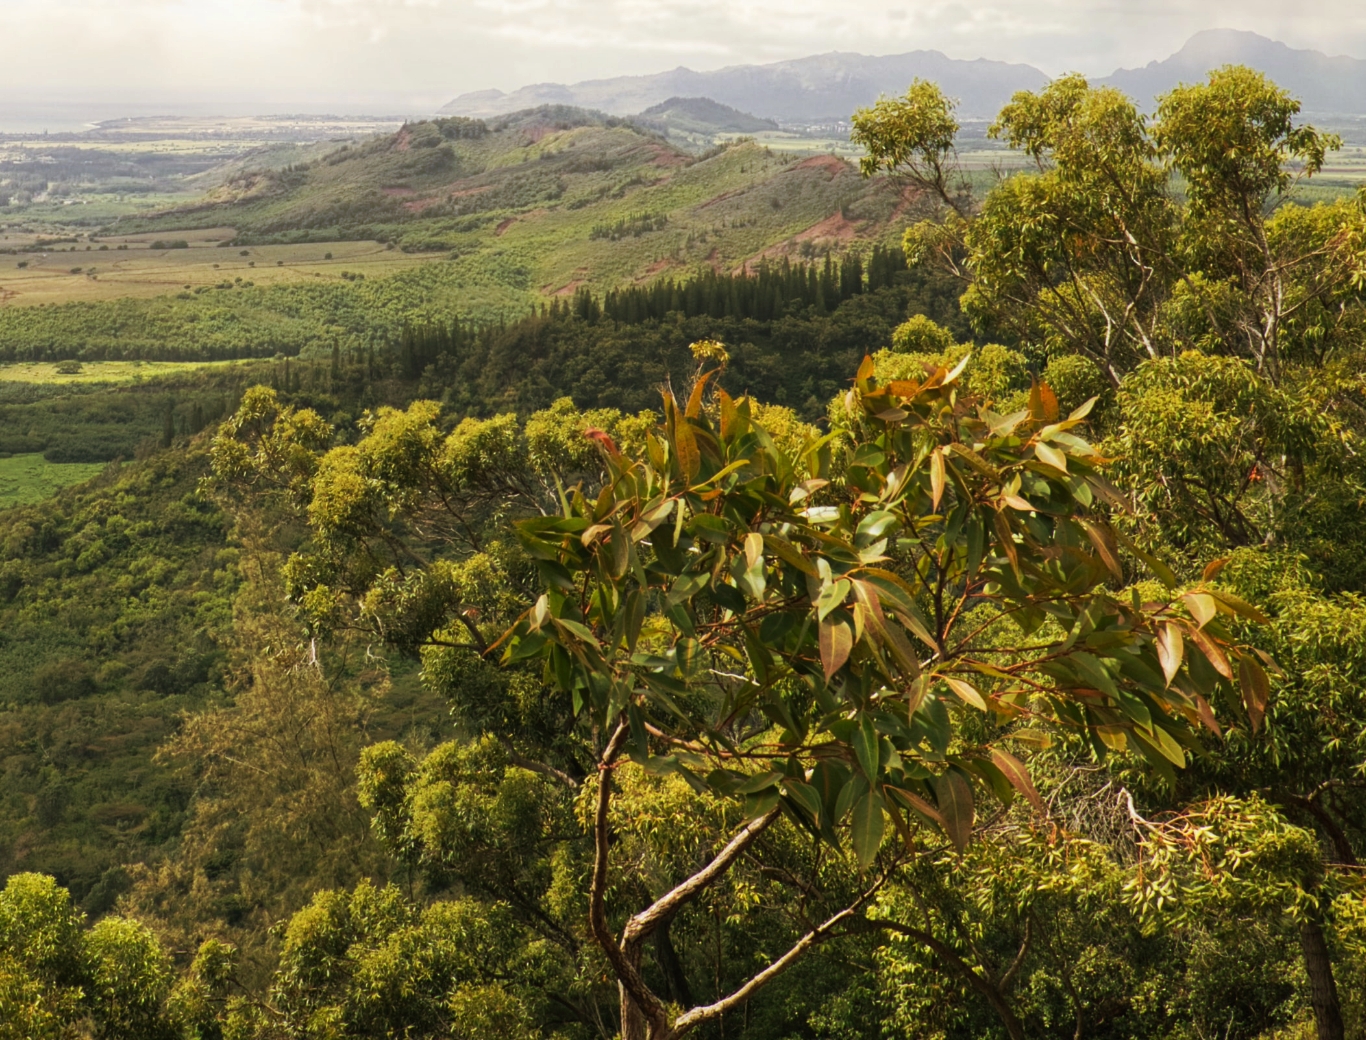 An image of the beautiful, green landscape of Waikoloa